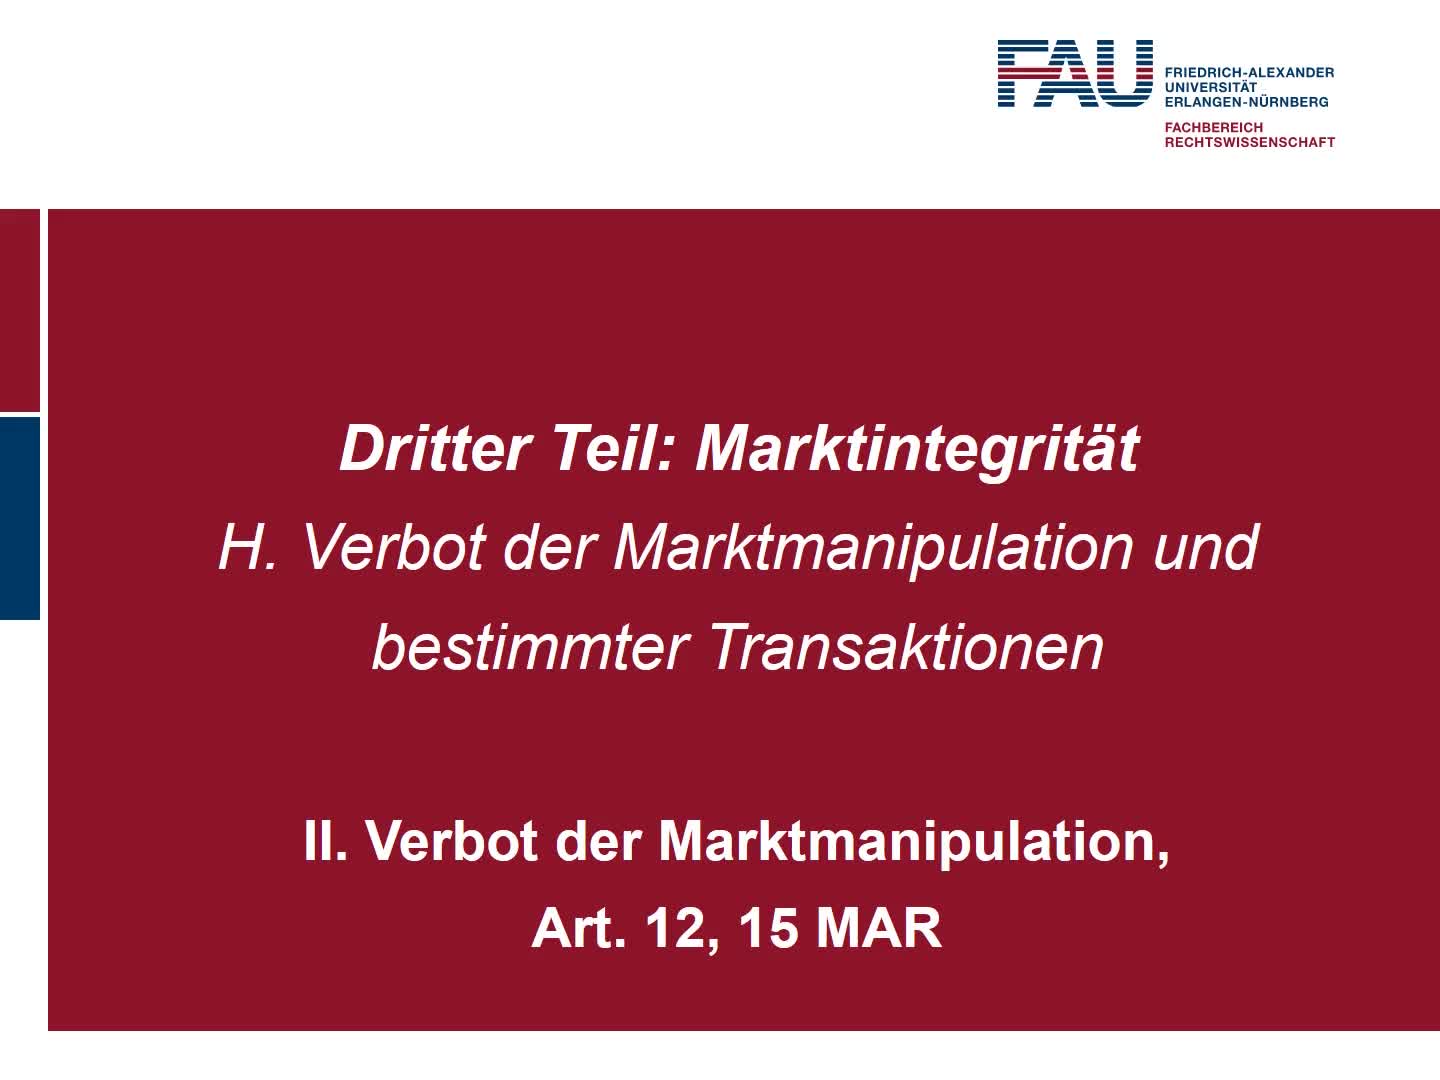 Verbot der Marktmanipulation, Art. 12, 15 MAR (4) preview image